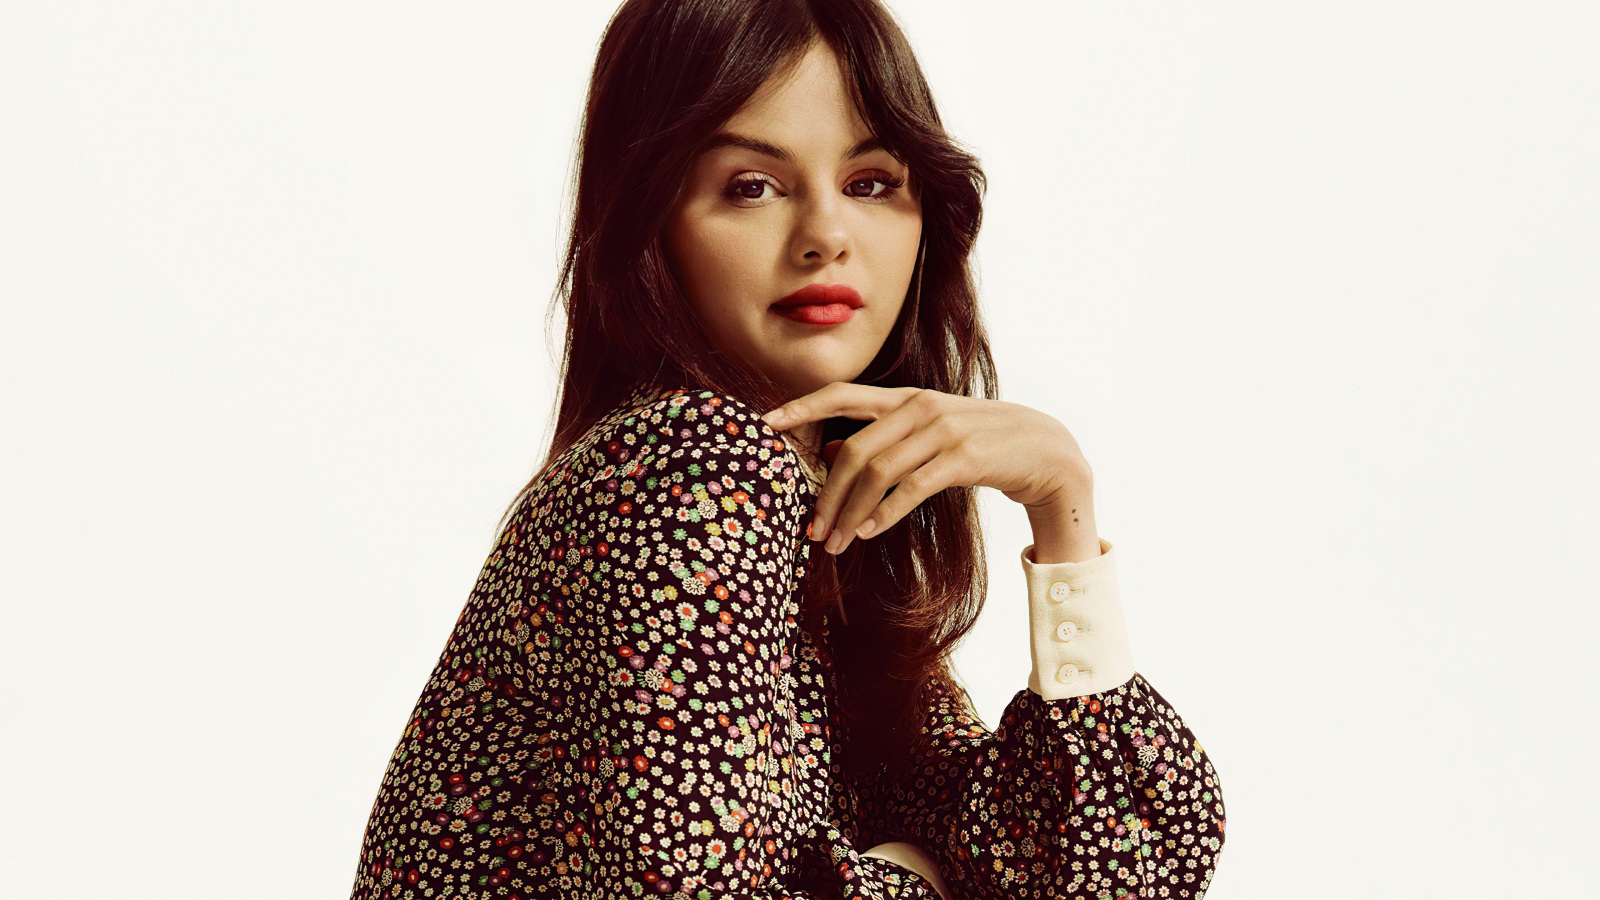 Selena Gomez Beautiful Face 2021 Wallpapers